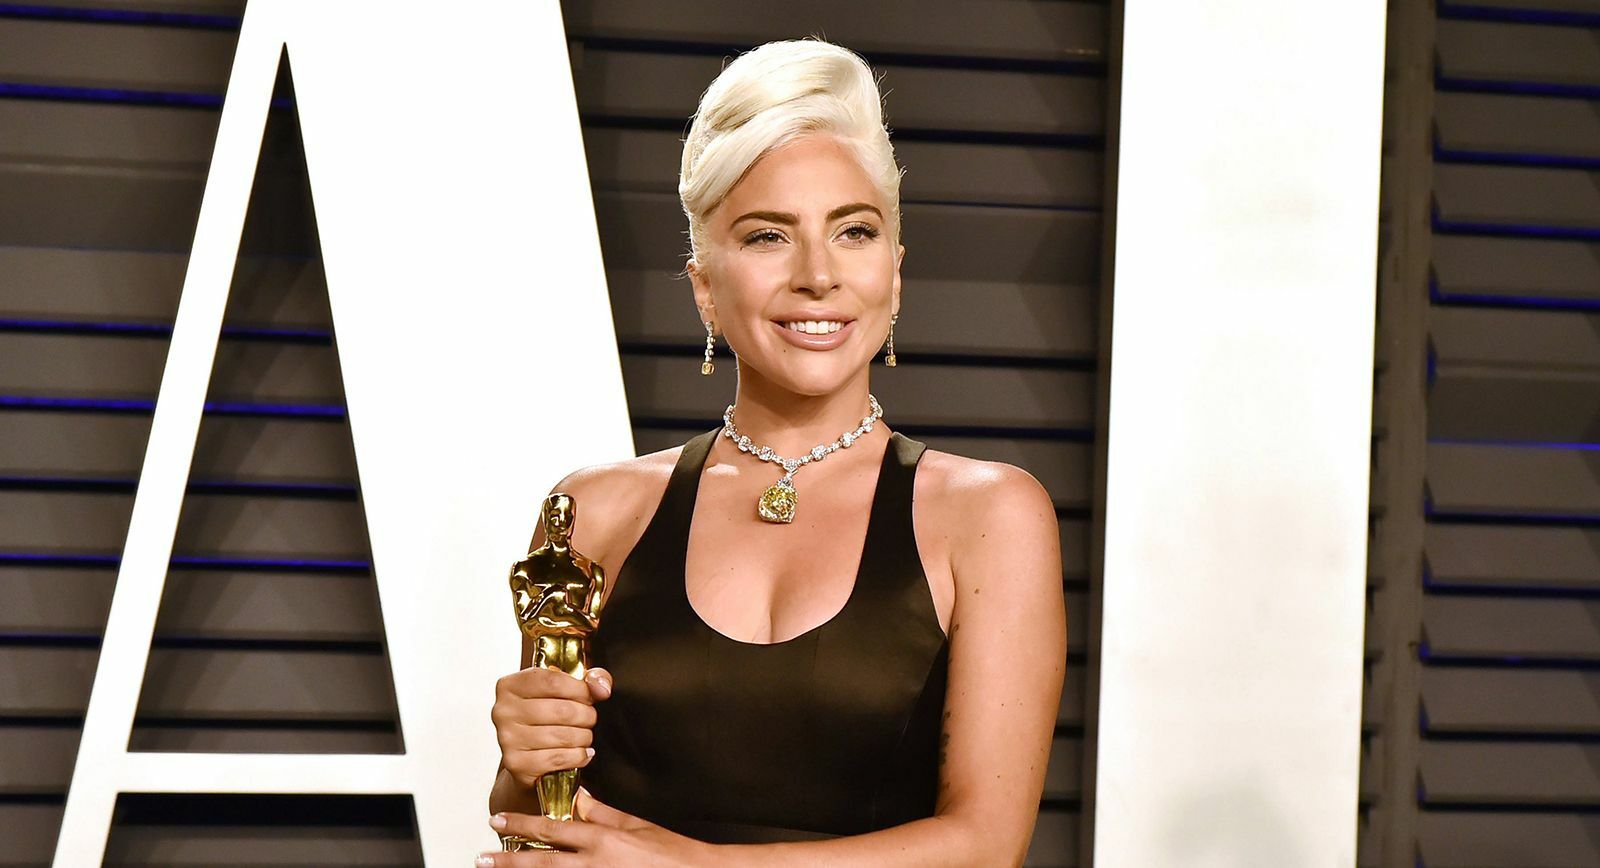 Lady Gaga at the 2019 Oscars wearing The Tiffany Yellow Diamond weighing 128.54 carats